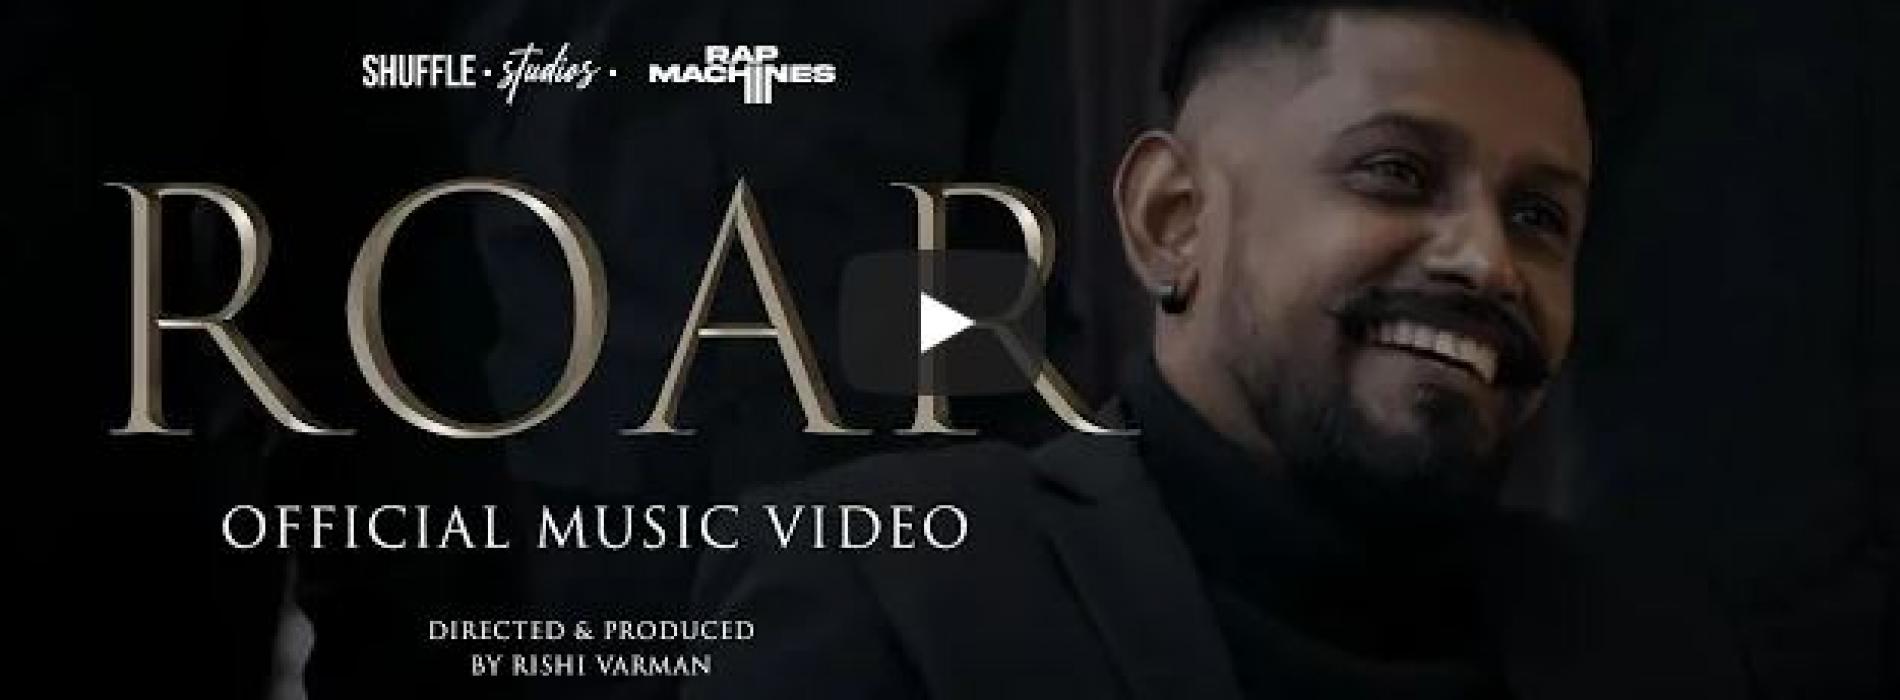 New Music : ADK – Roar // Official Music Video [ Dir By Rishi Varman ]